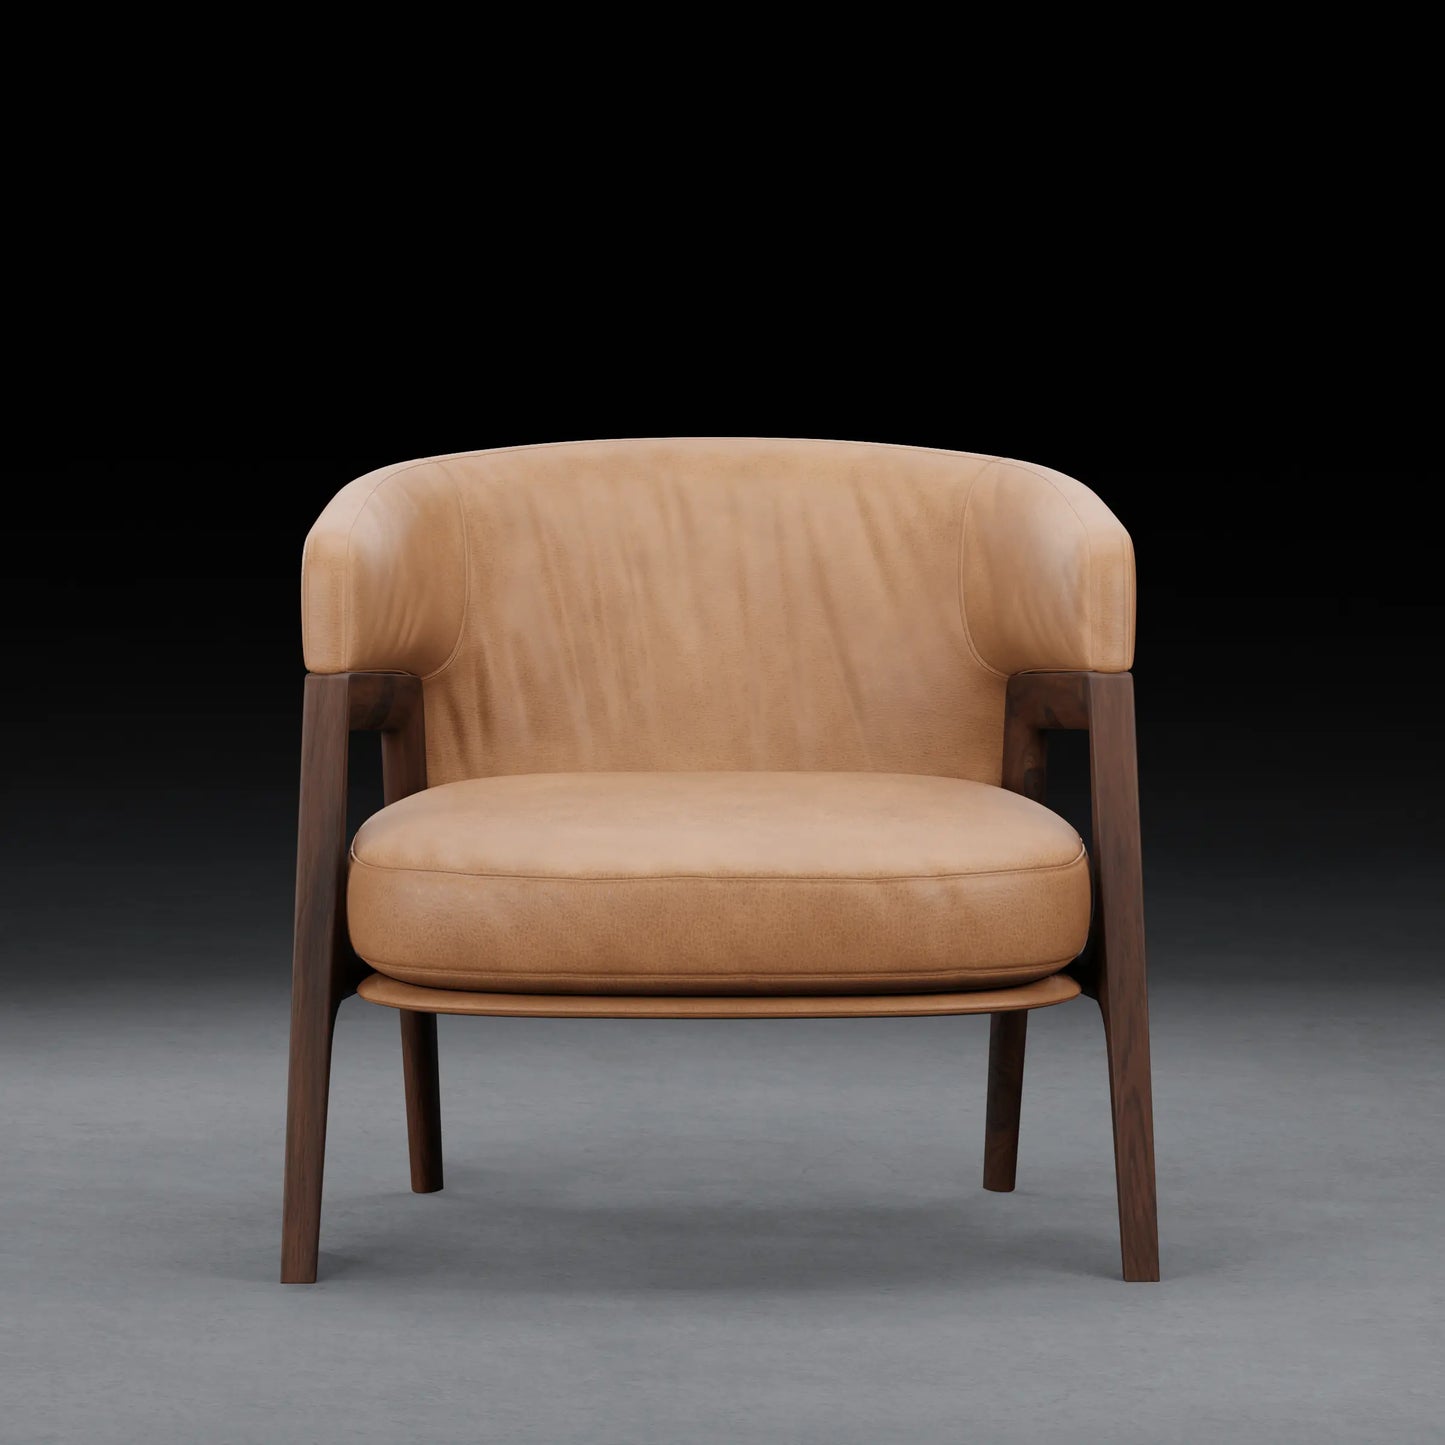 LEMON - Armchair in Teak wood - Leather Finish | Dark Beige Color